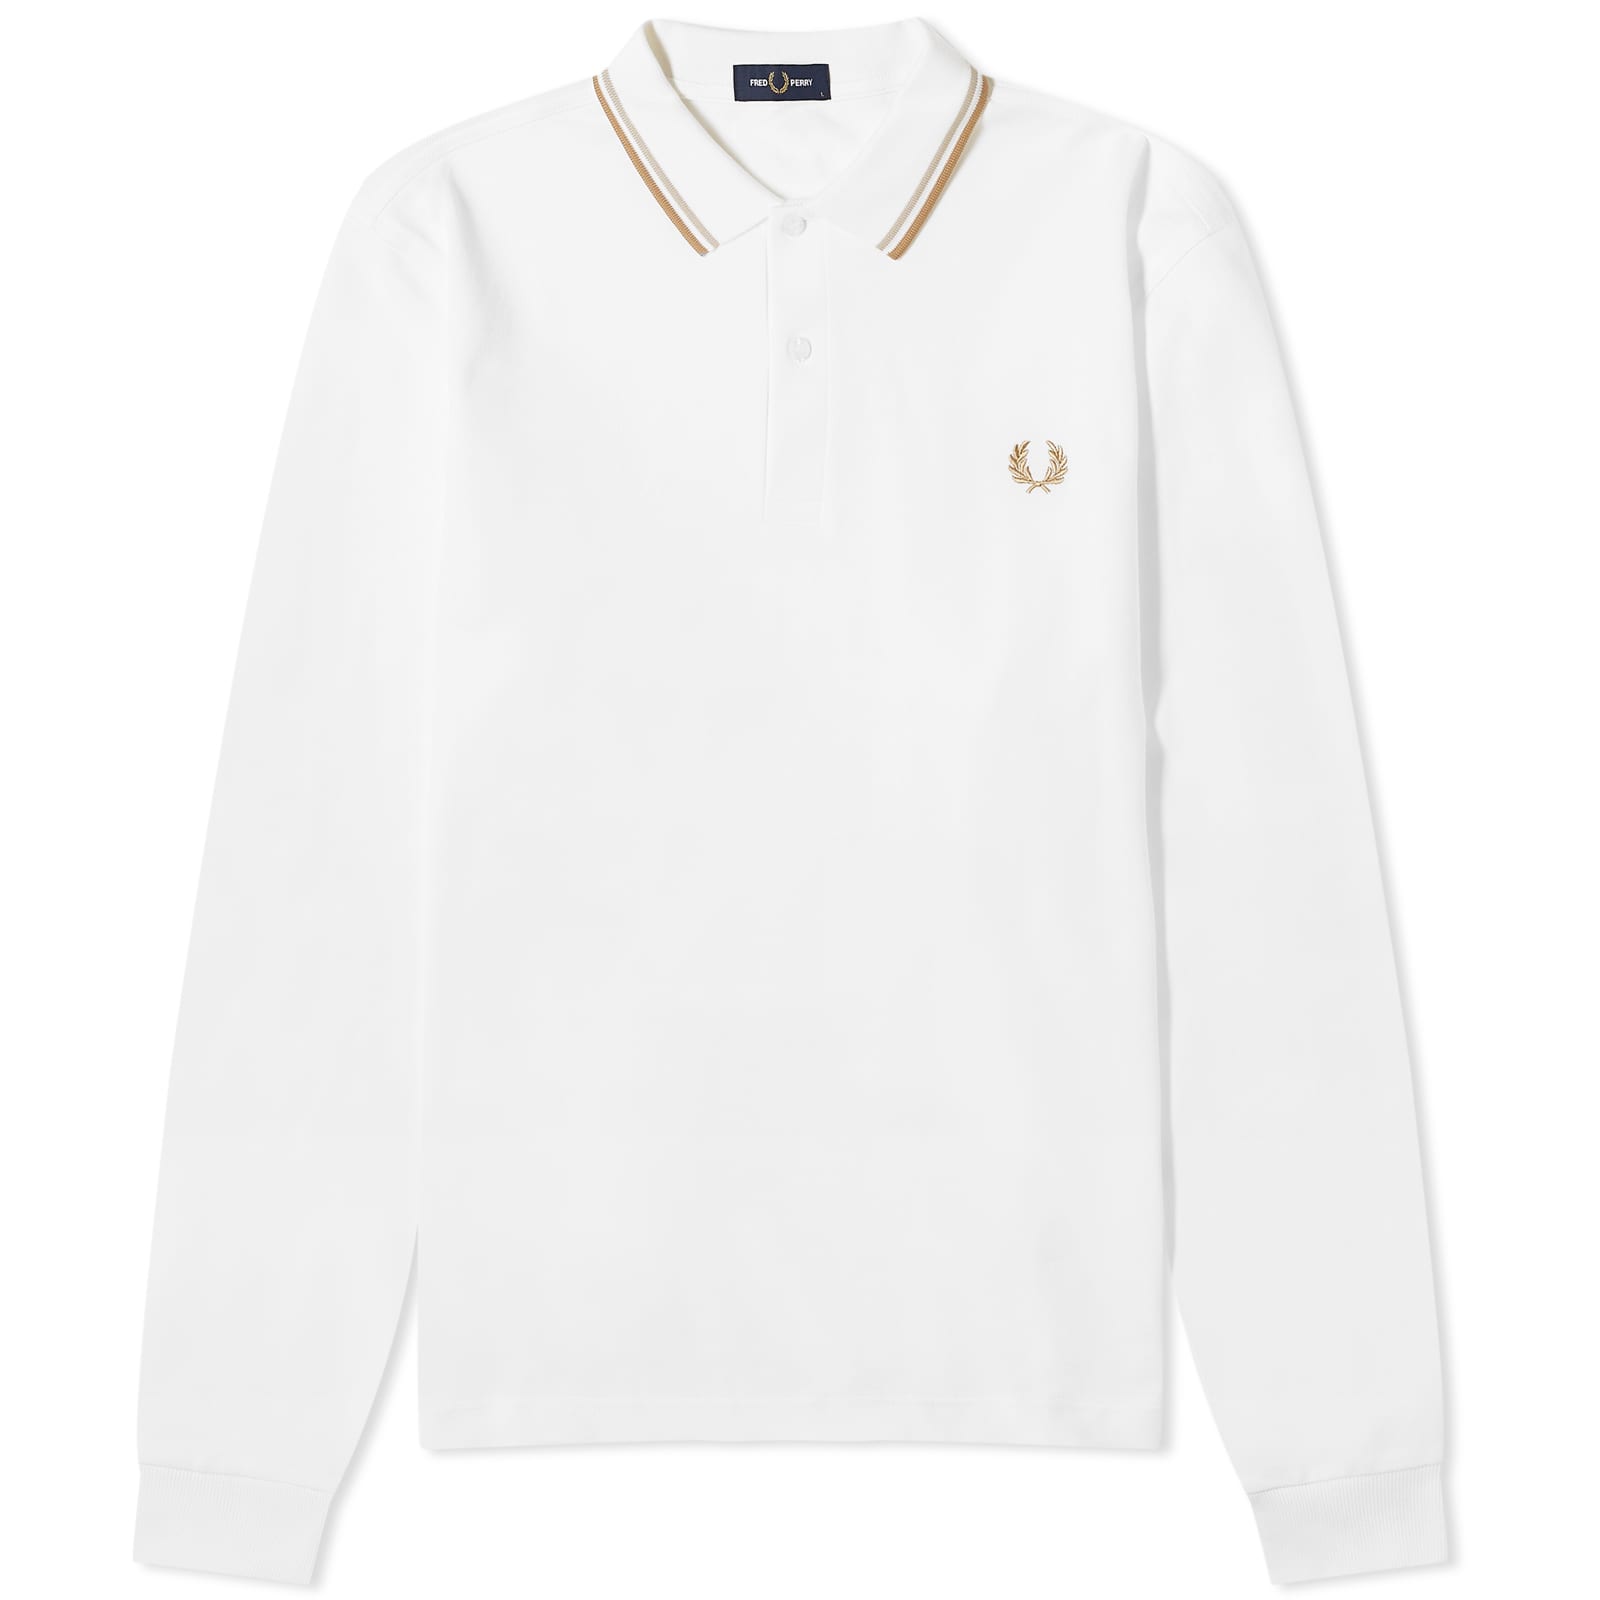 Поло Fred Perry Long Sleeve Twin Tipped, цвет White, Oat & Stone теннисная рубашка поло с длинными рукавами fred perry экрю